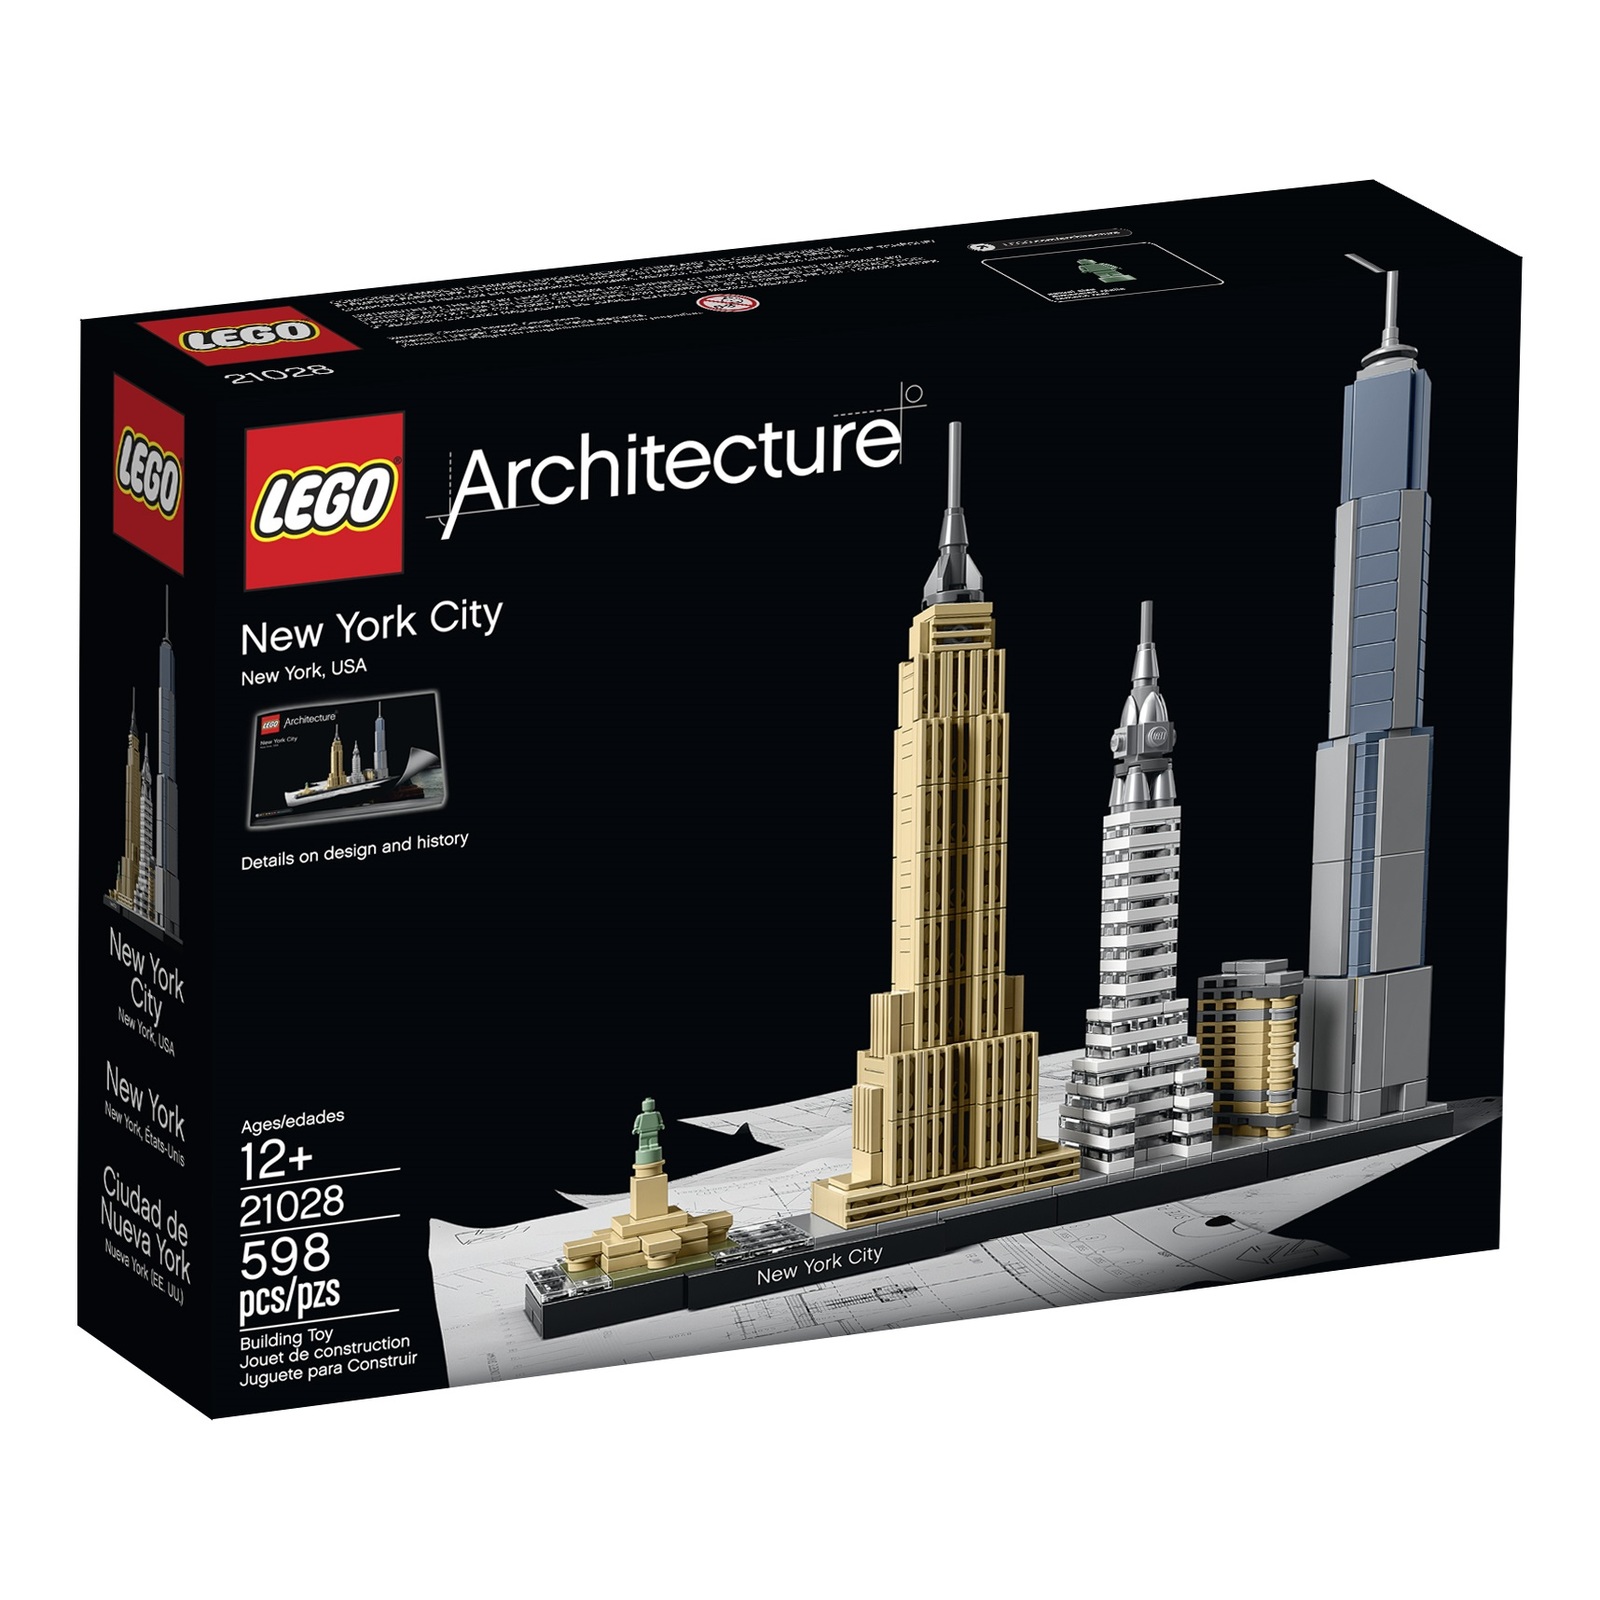 LEGO Architecture New York City Skyline Model 21028 Building Toy Set (598 pcs)